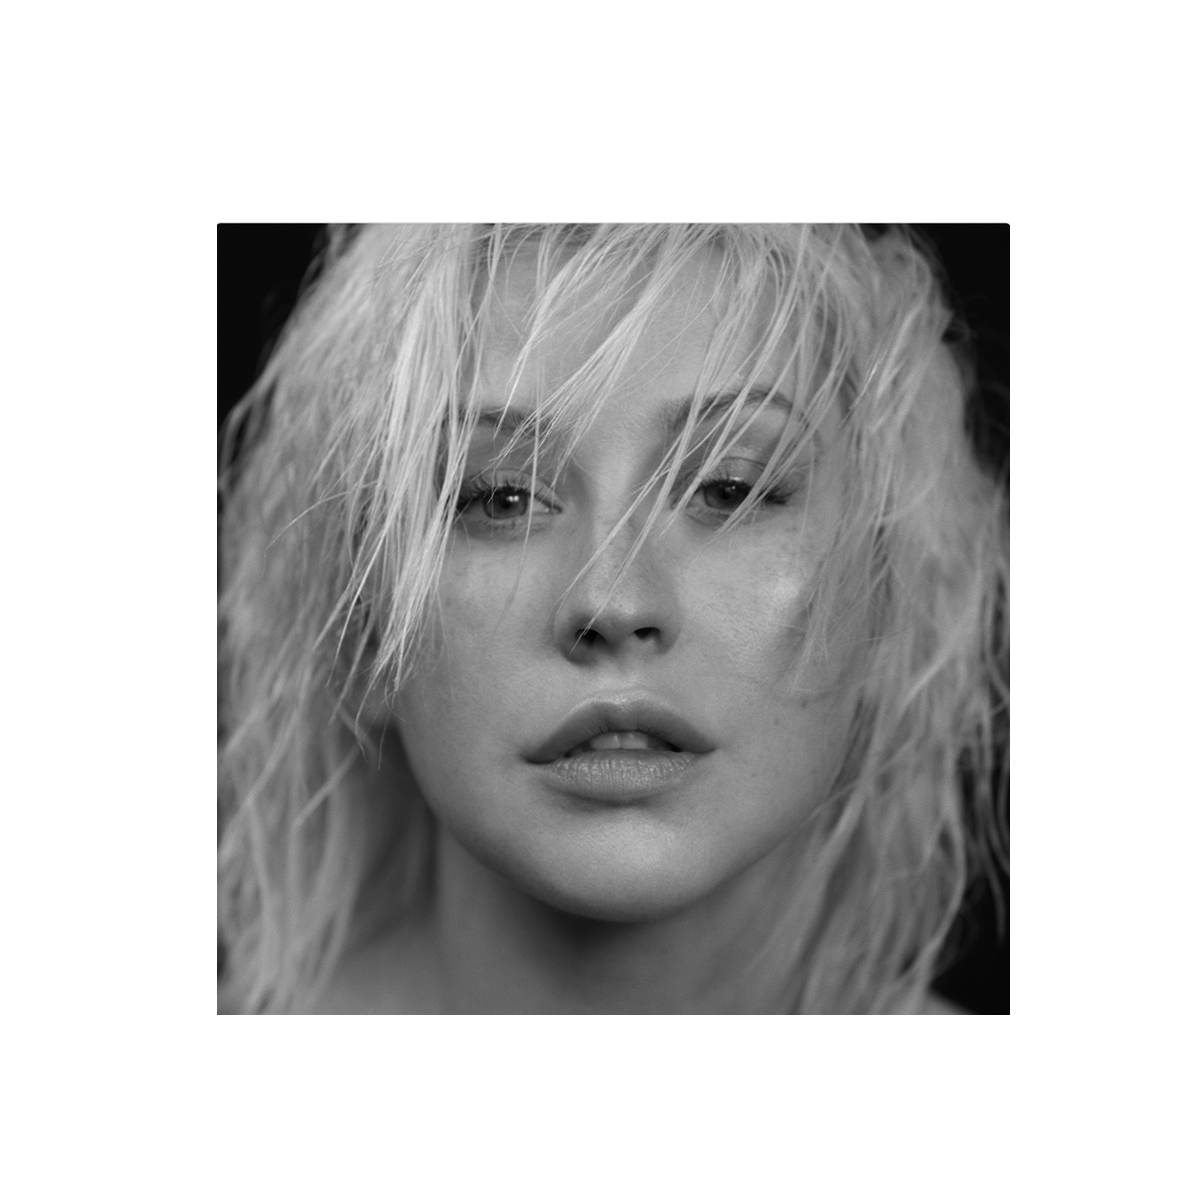 Liberation CD - Christina Aguilera